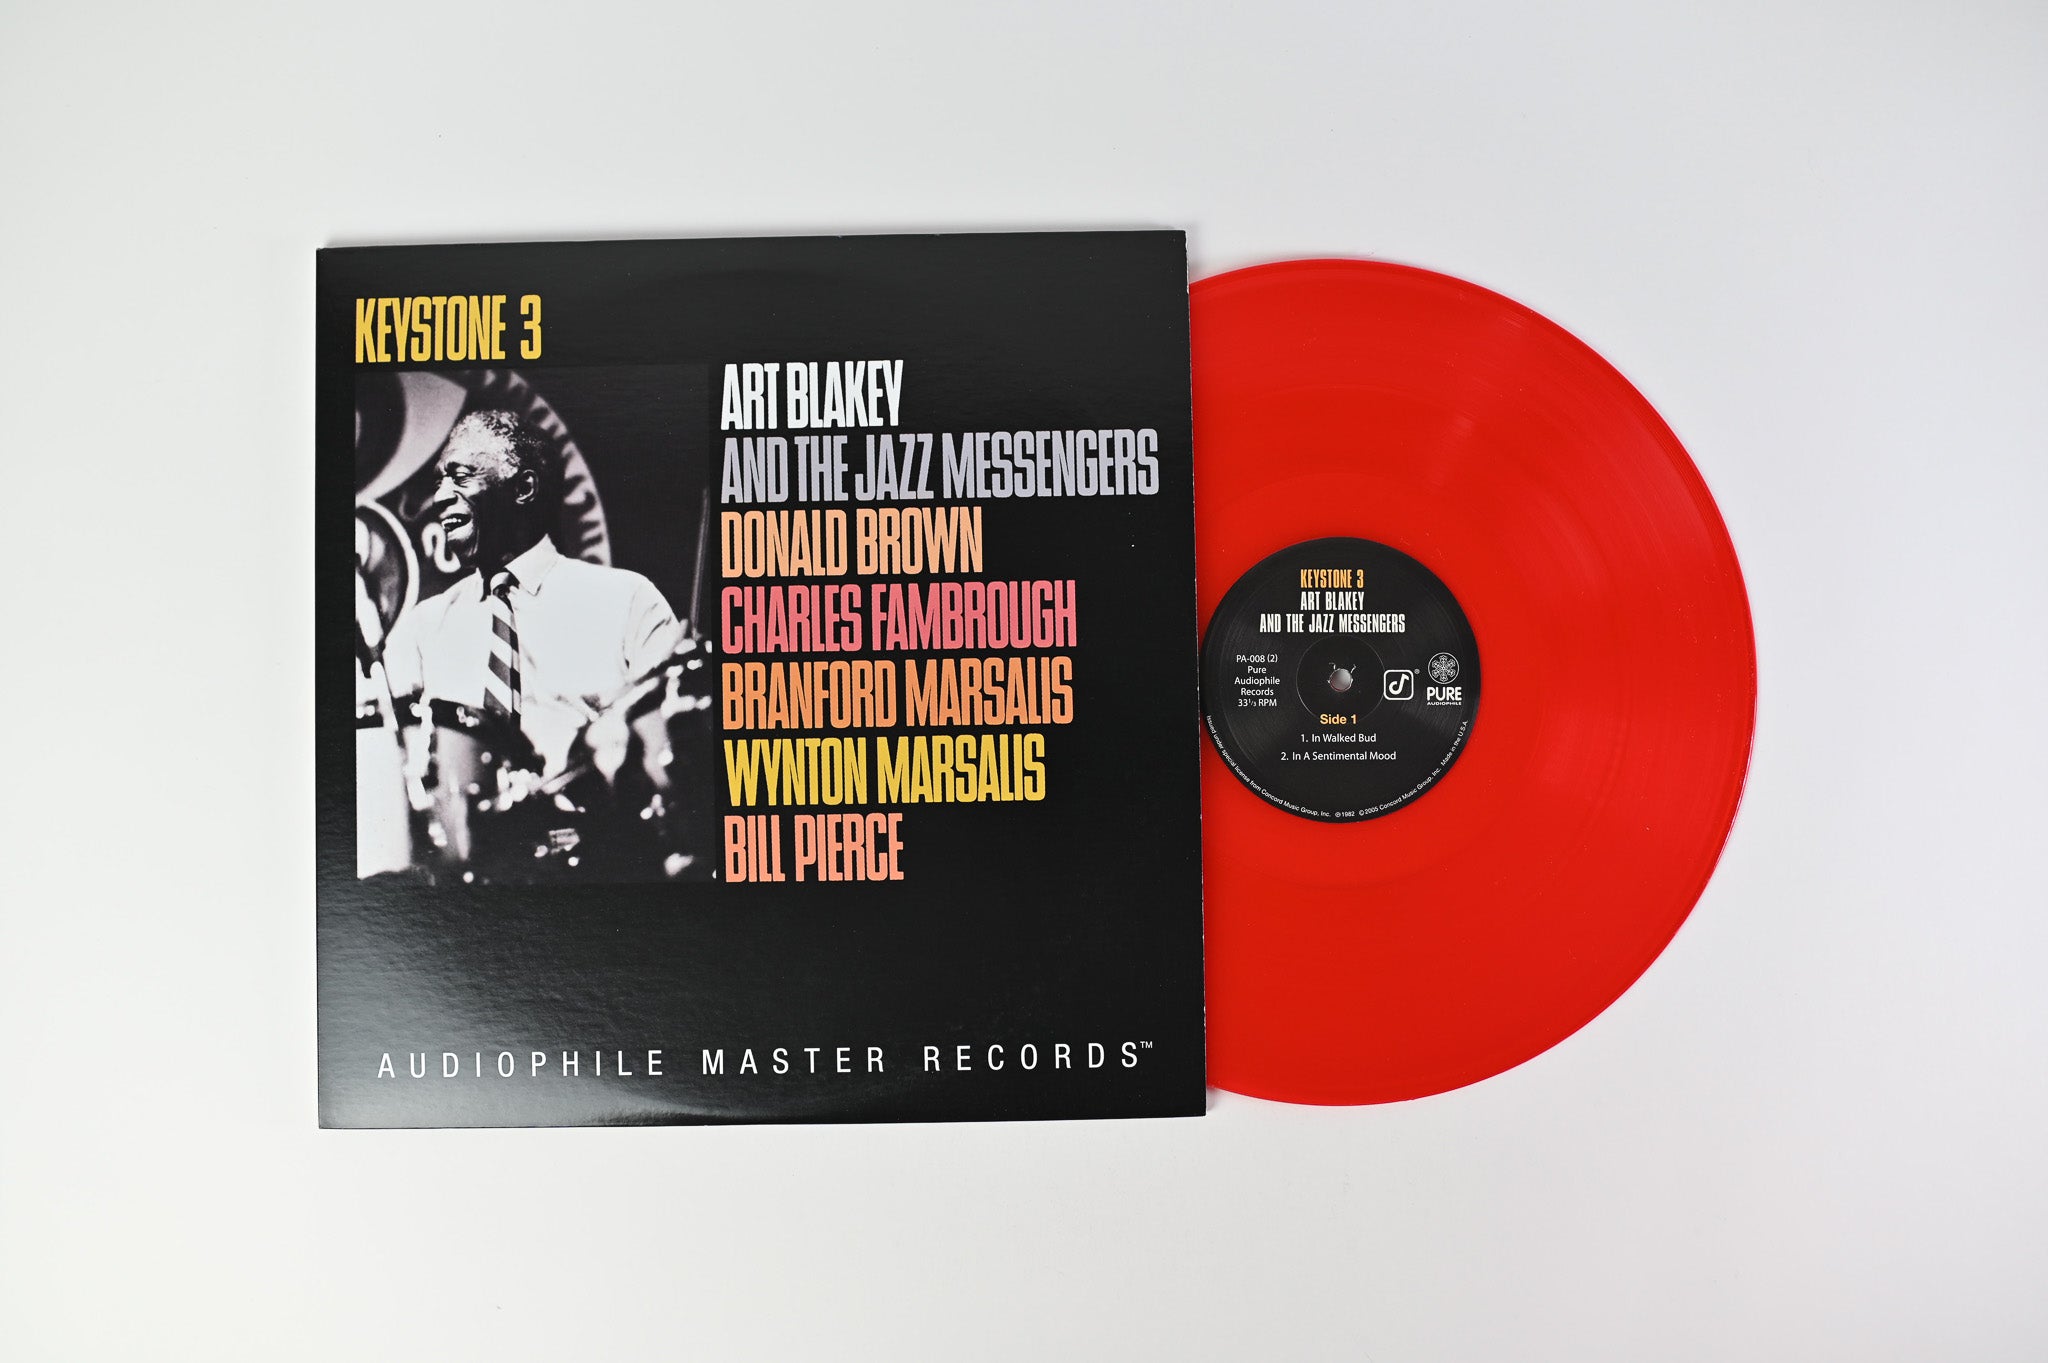 Art Blakey & The Jazz Messengers - Keystone 3 on Pure Audiophile Ltd Numbered Red Vinyl Reissue